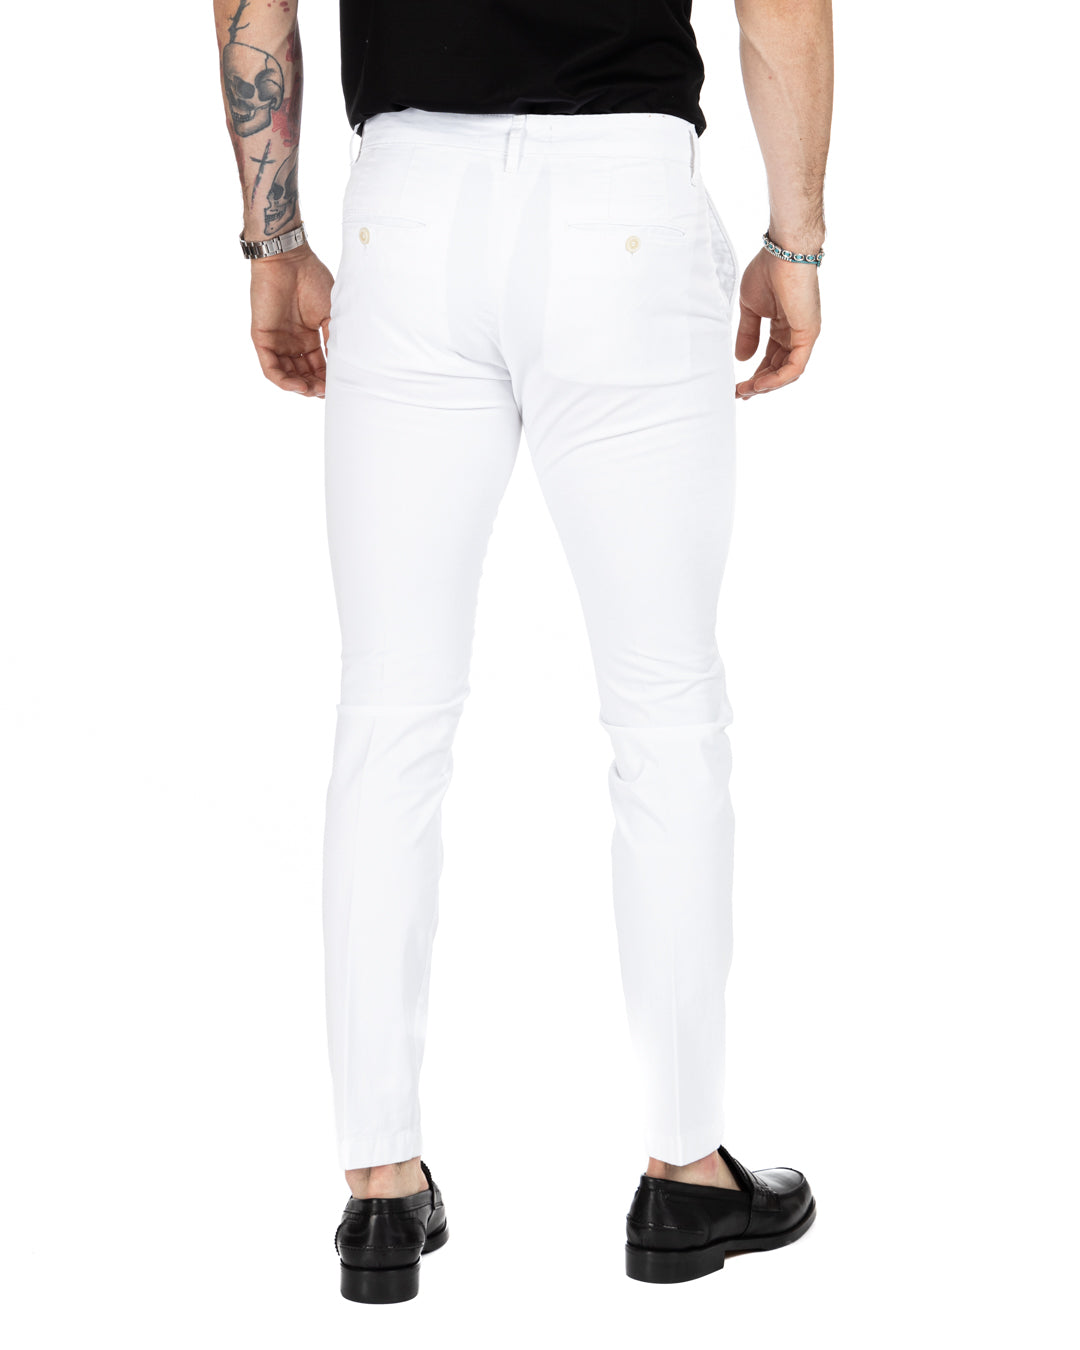 Frank - white basic trousers